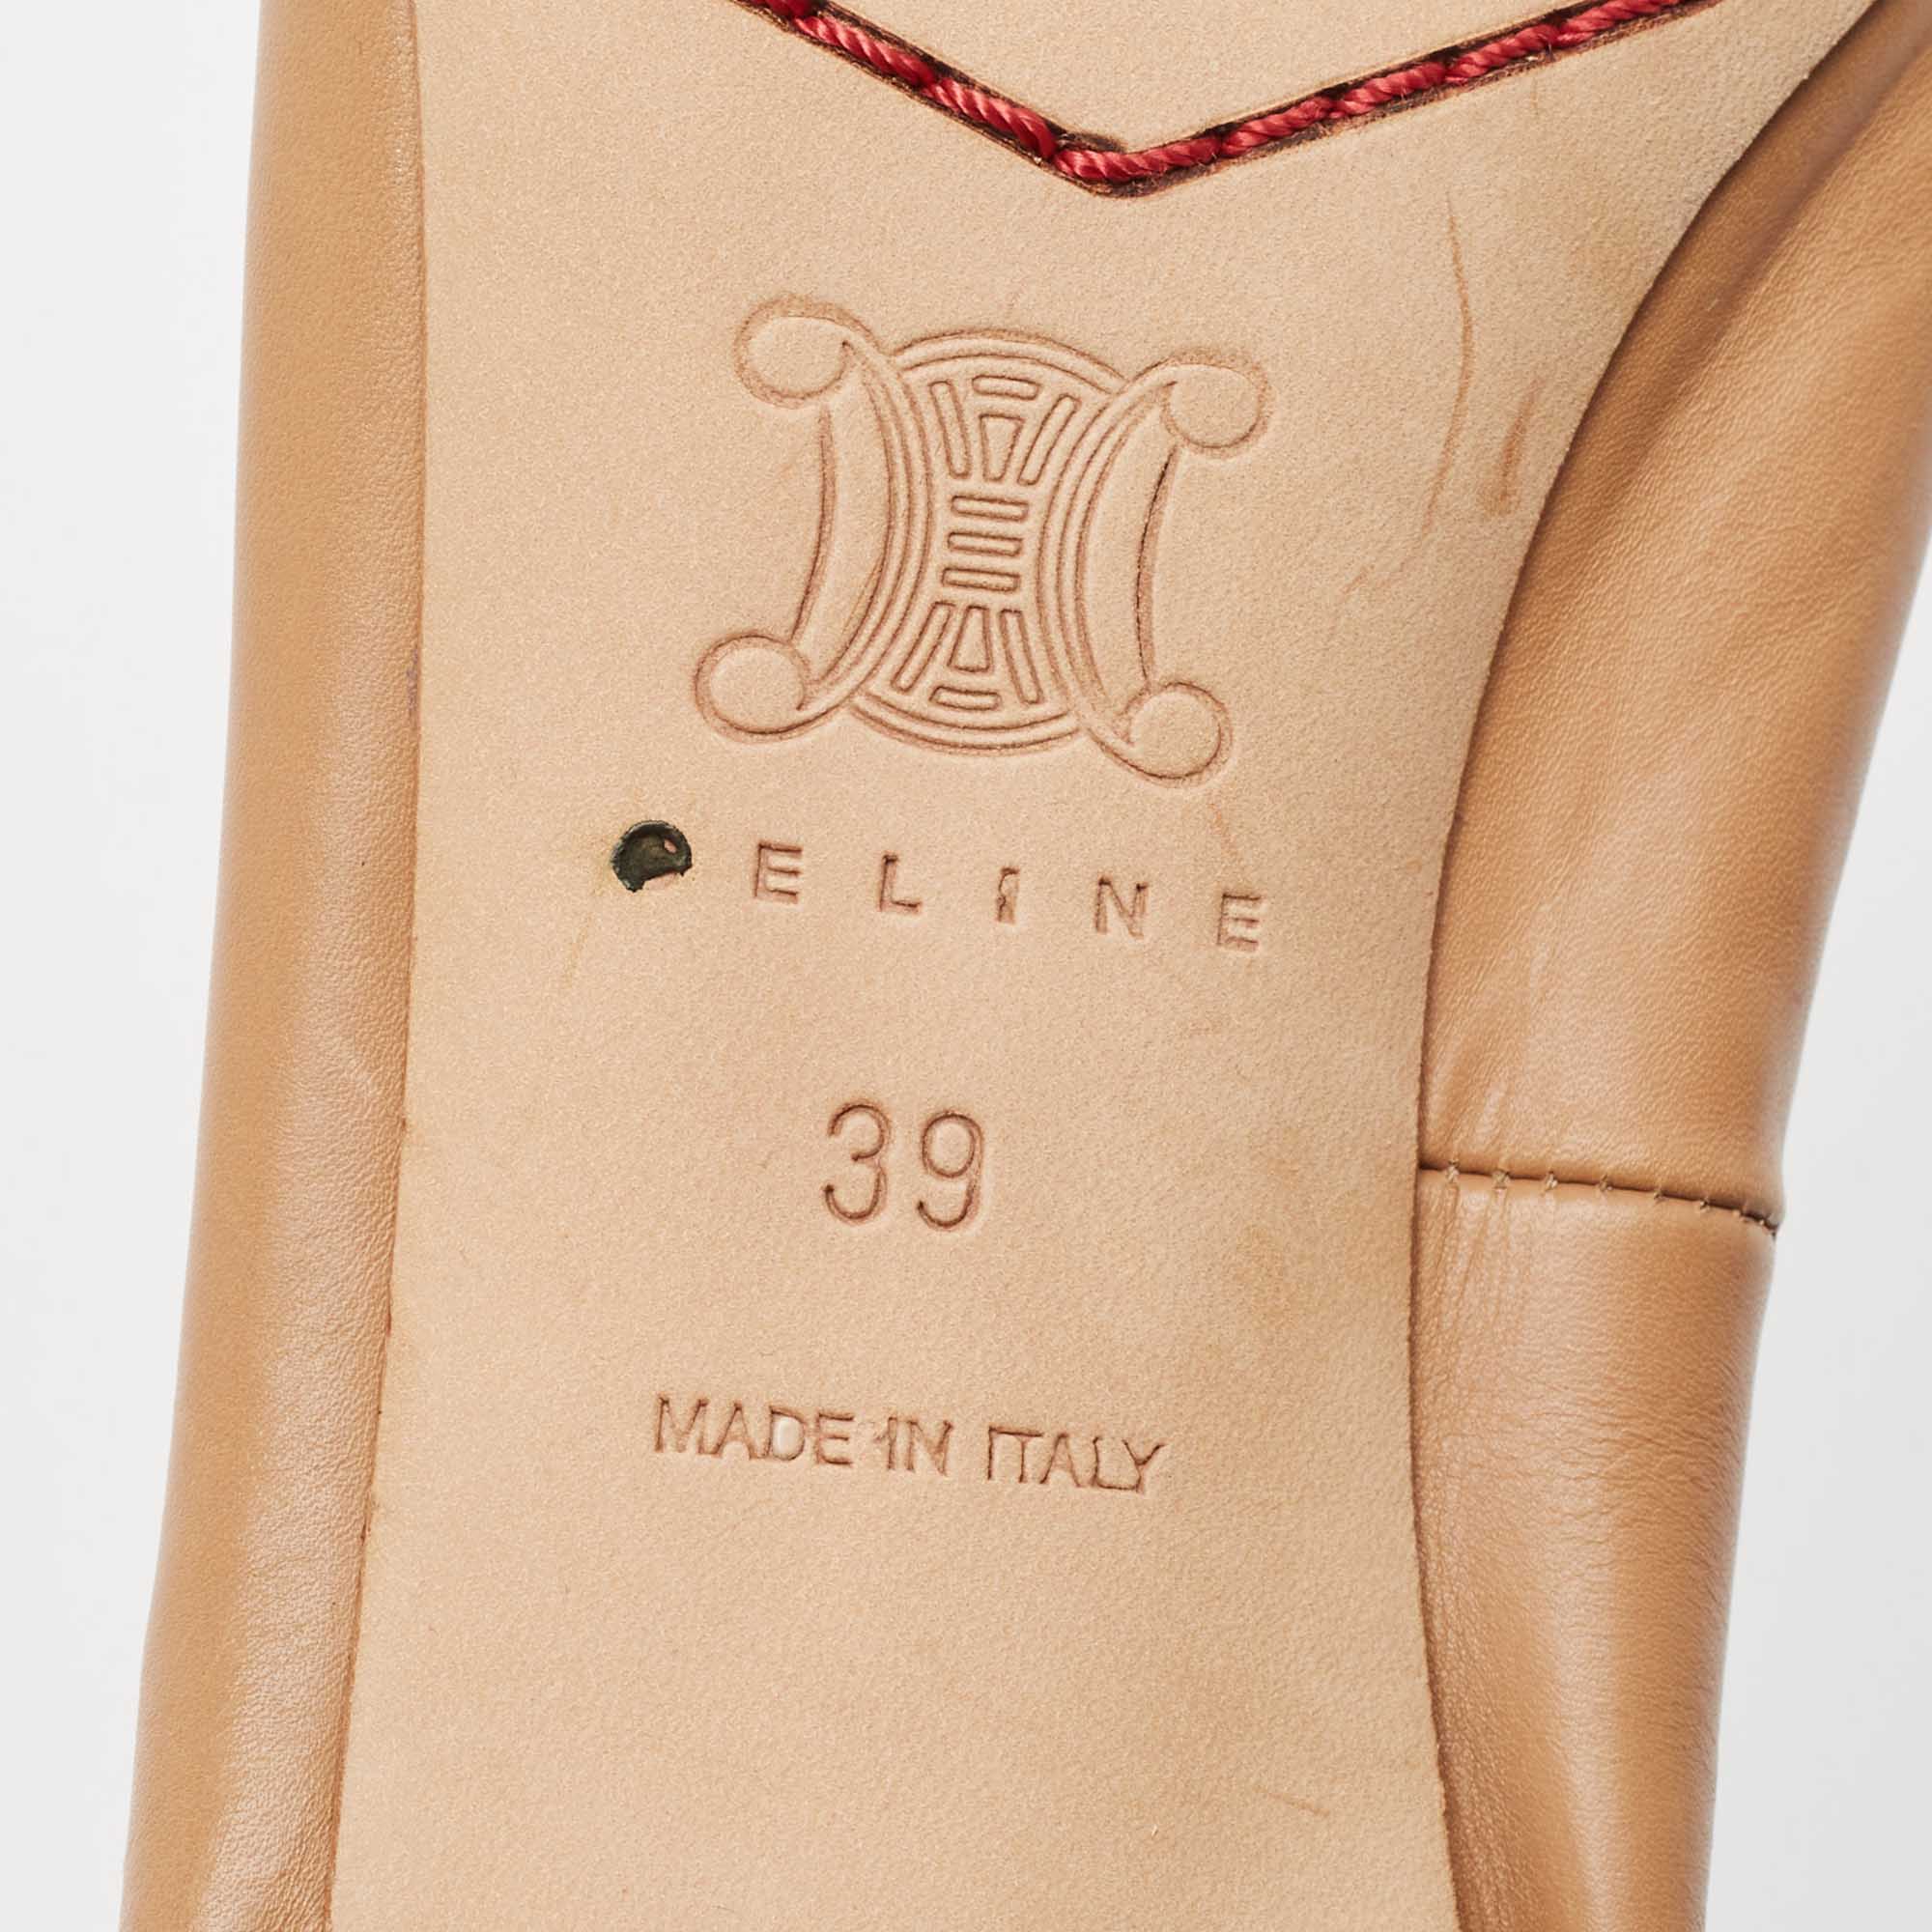 Celine Beige Leather Scrunch Pumps Size 39